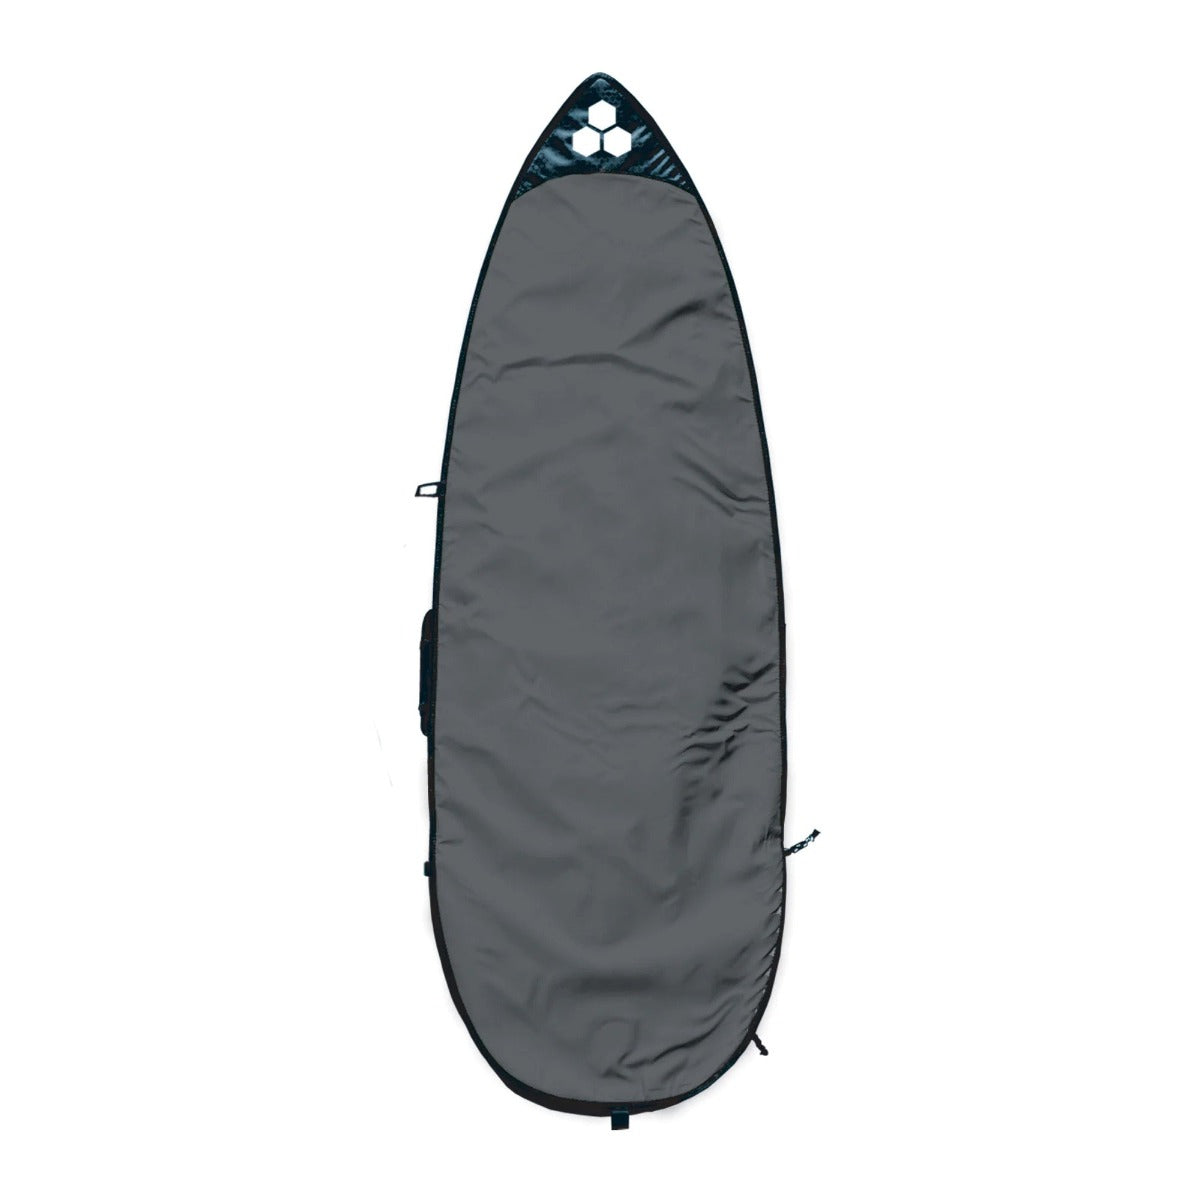 channel-islands-shortboard-surfboard-bag-cover-3mm-charcoal-white-hex-60-64-6-70-76-cover-bag-blacksheepsurfco-galway-ireland-front